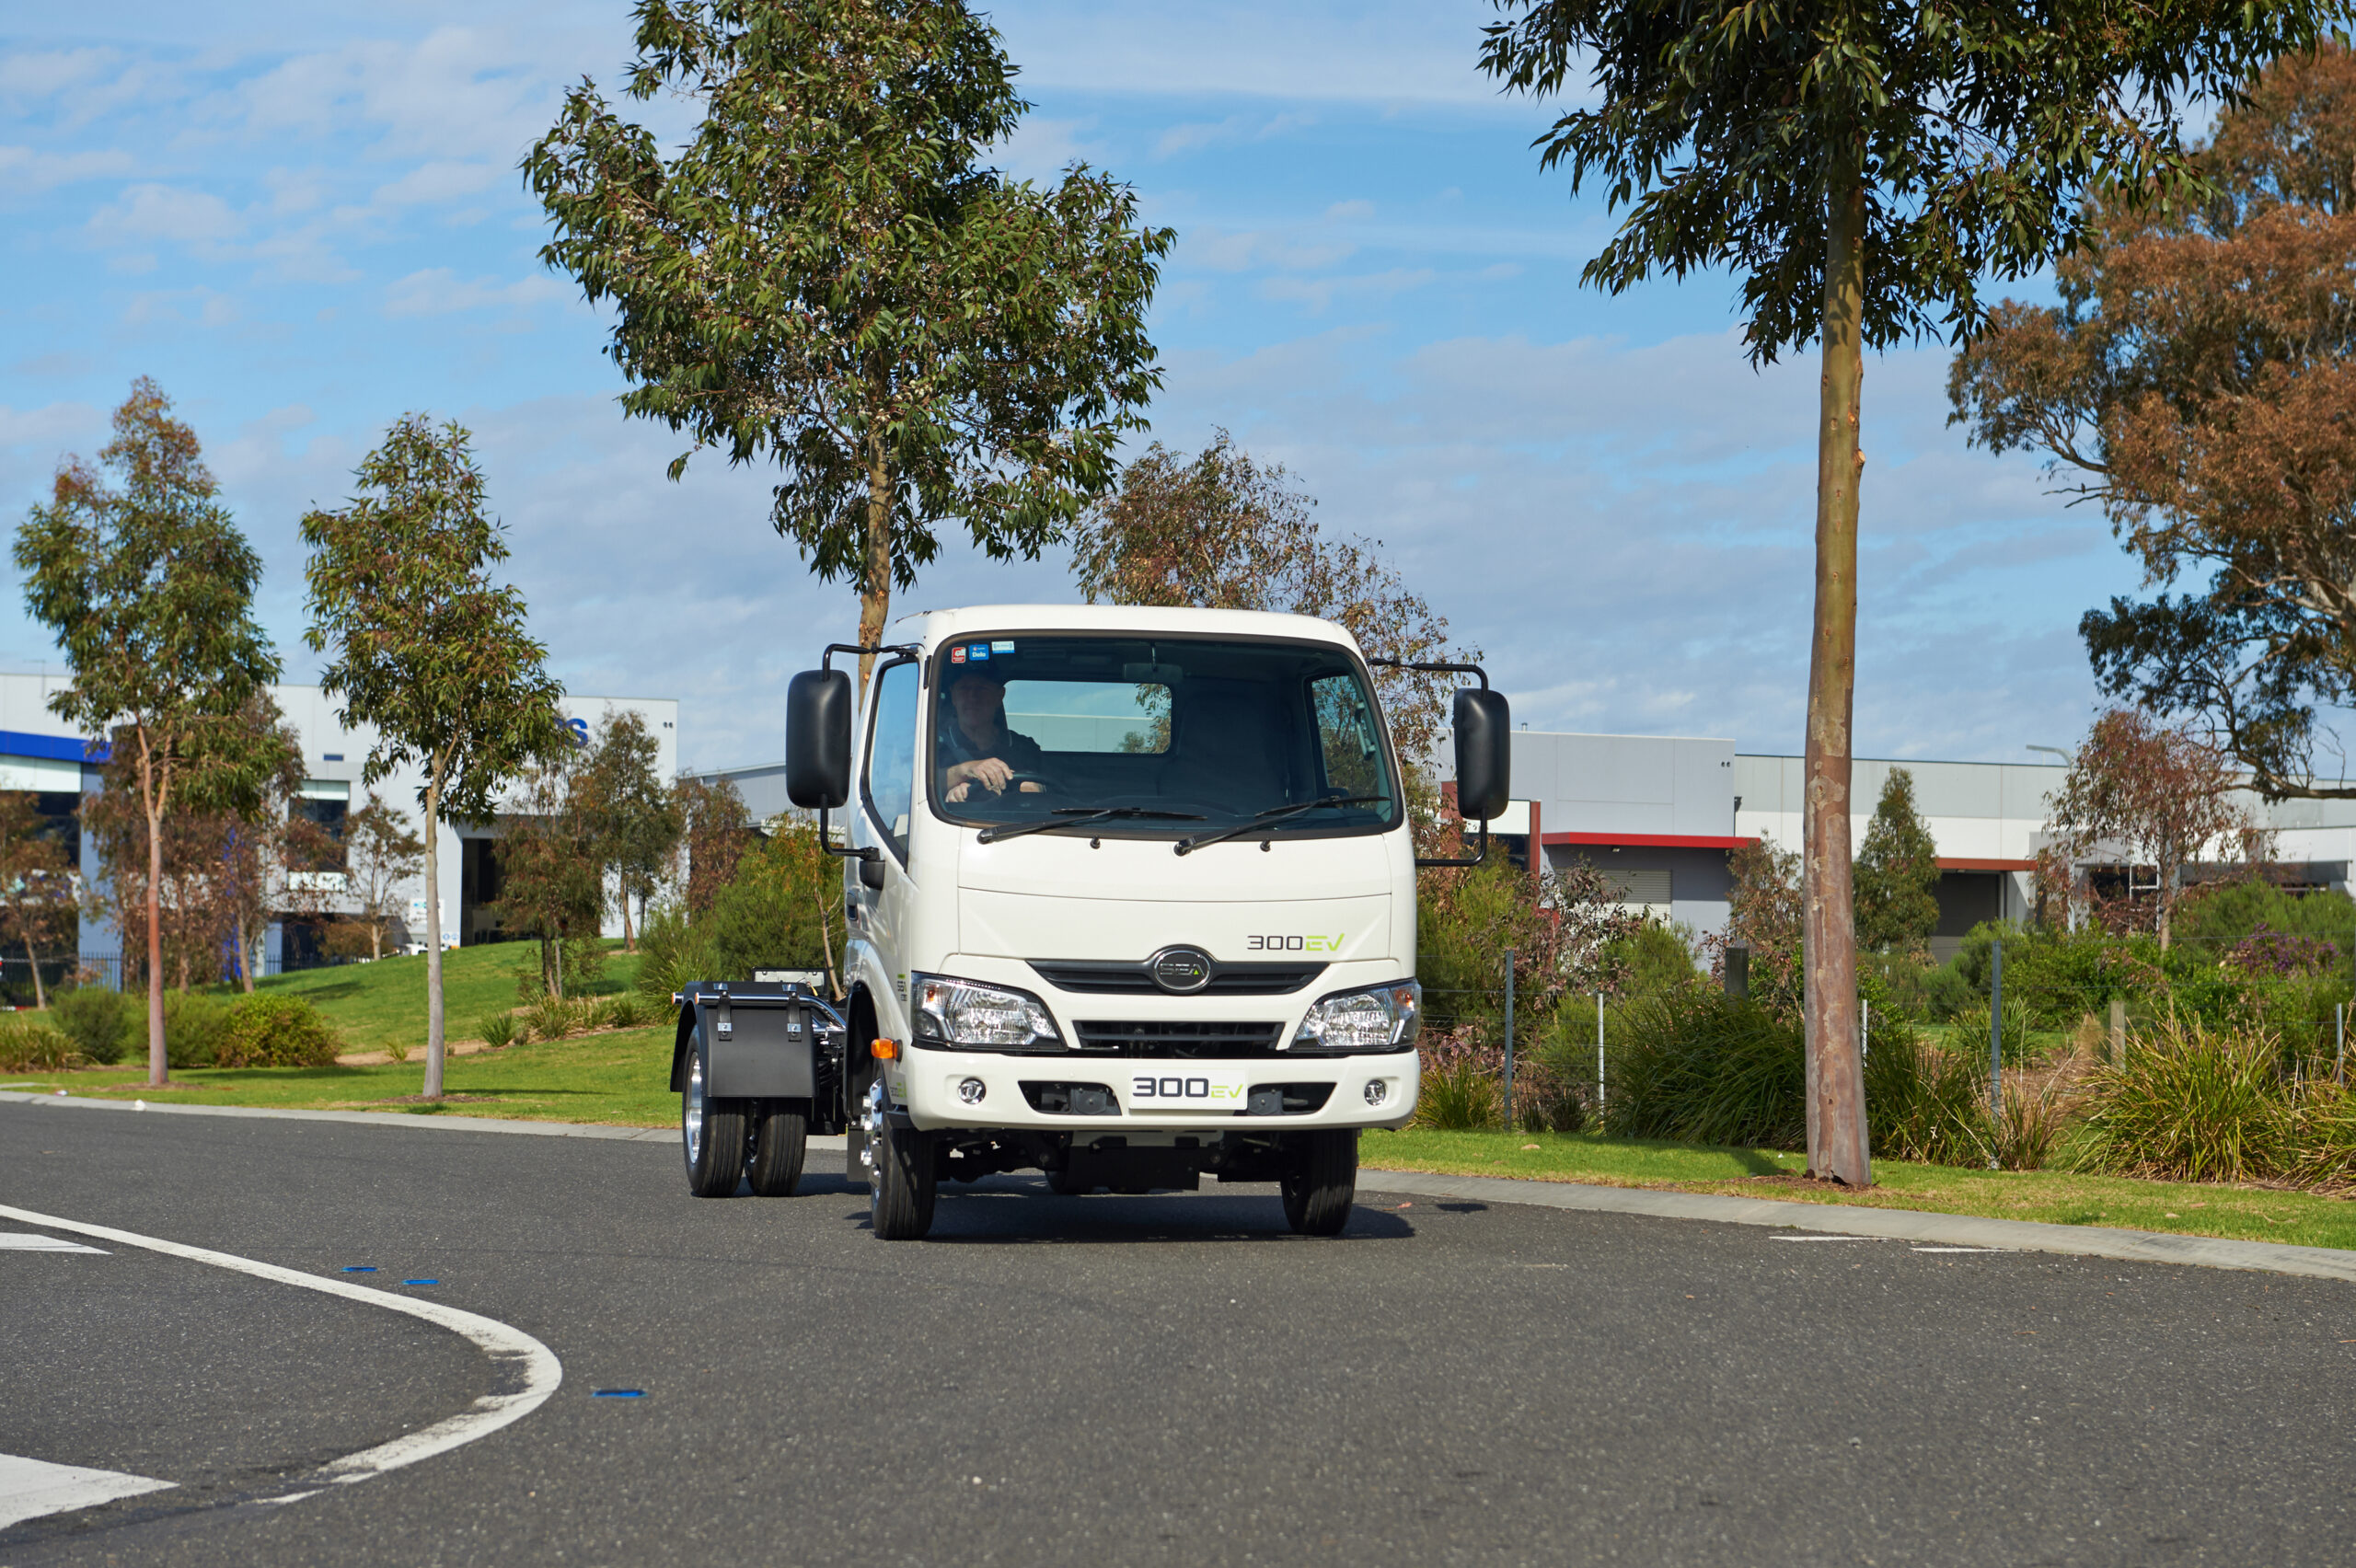 Meet the new EV truck making its way onto Australian roads